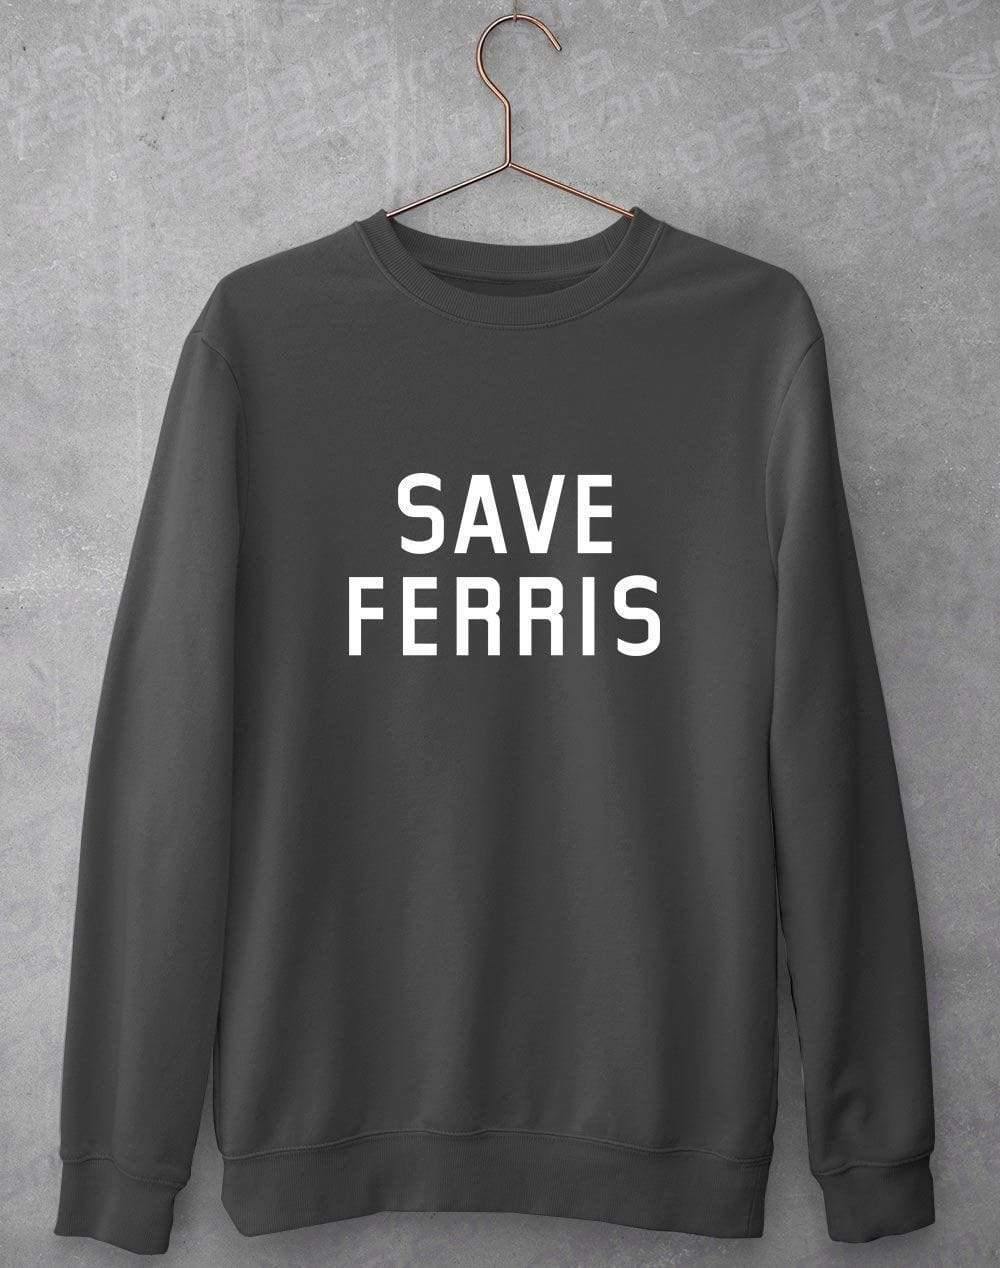 Save Ferris Sweatshirt S / Charcoal  - Off World Tees